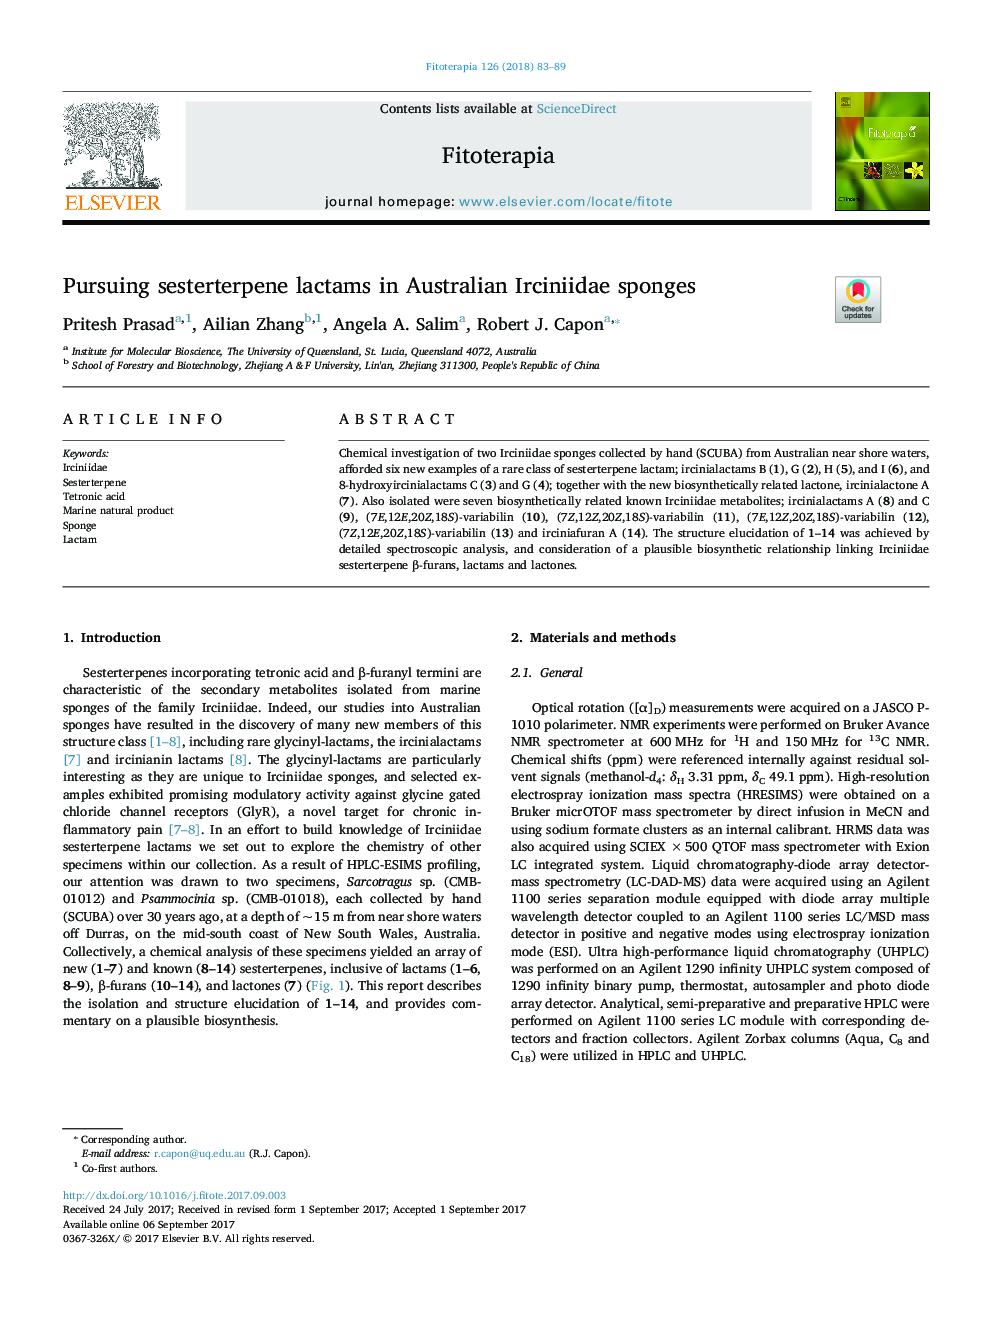 Pursuing sesterterpene lactams in Australian Irciniidae sponges